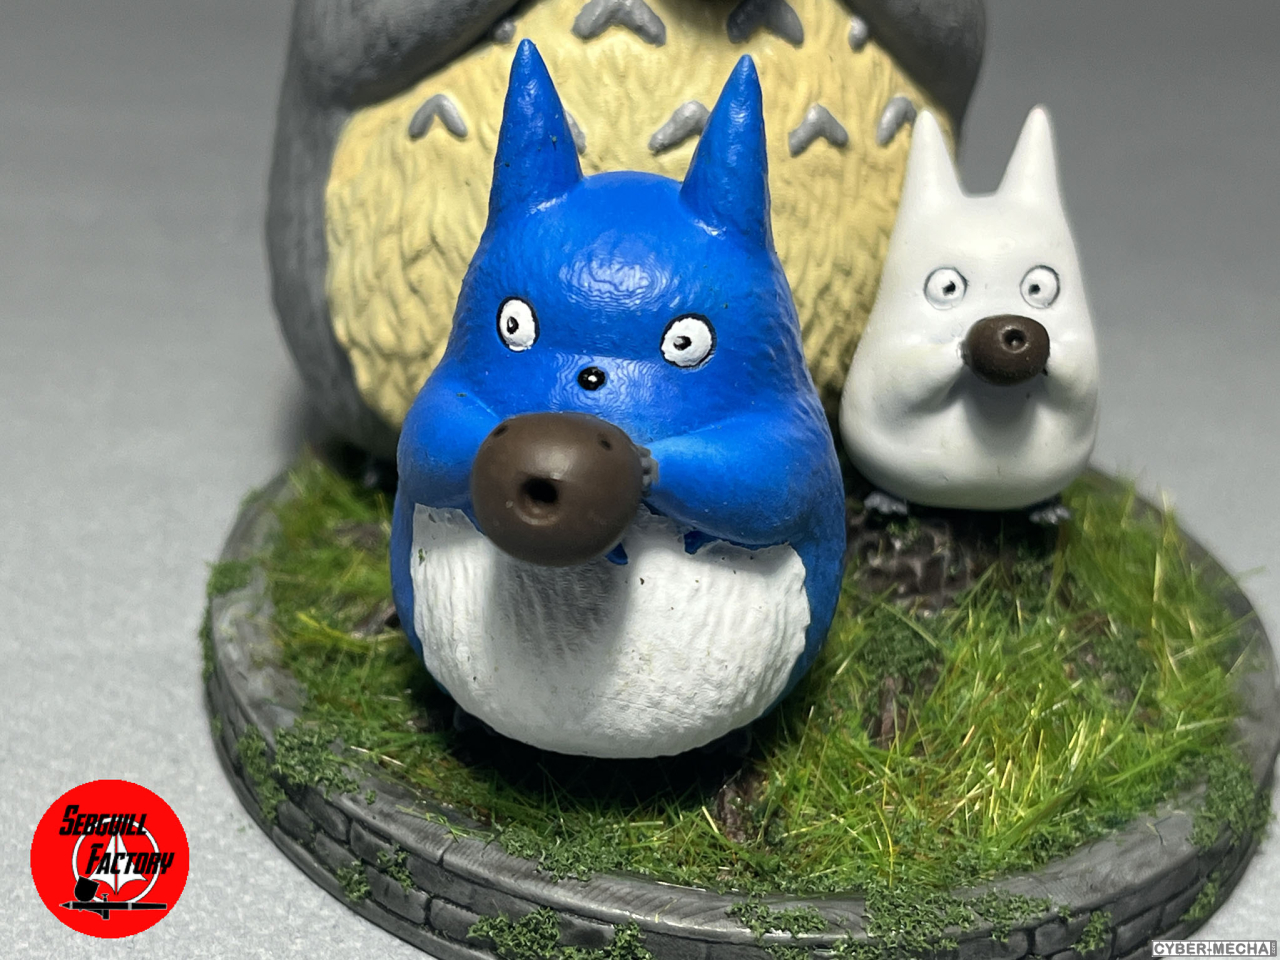 Print 3D : Totoro 1701076745